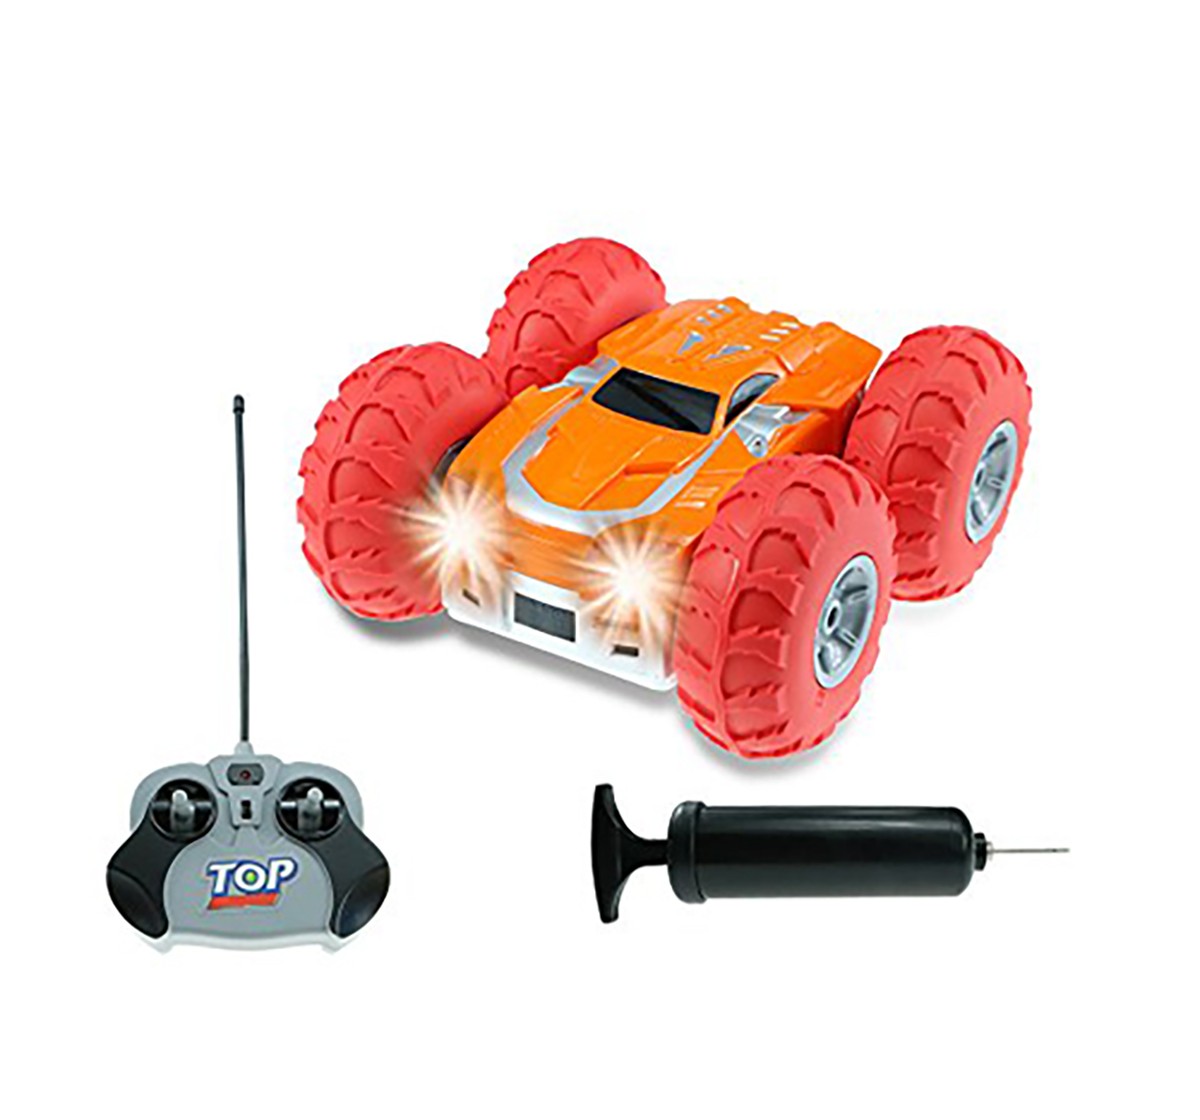 Yinrun Karma Speed Cyclone-2.4G Remote Control Toys for Kids age 6Y+ 